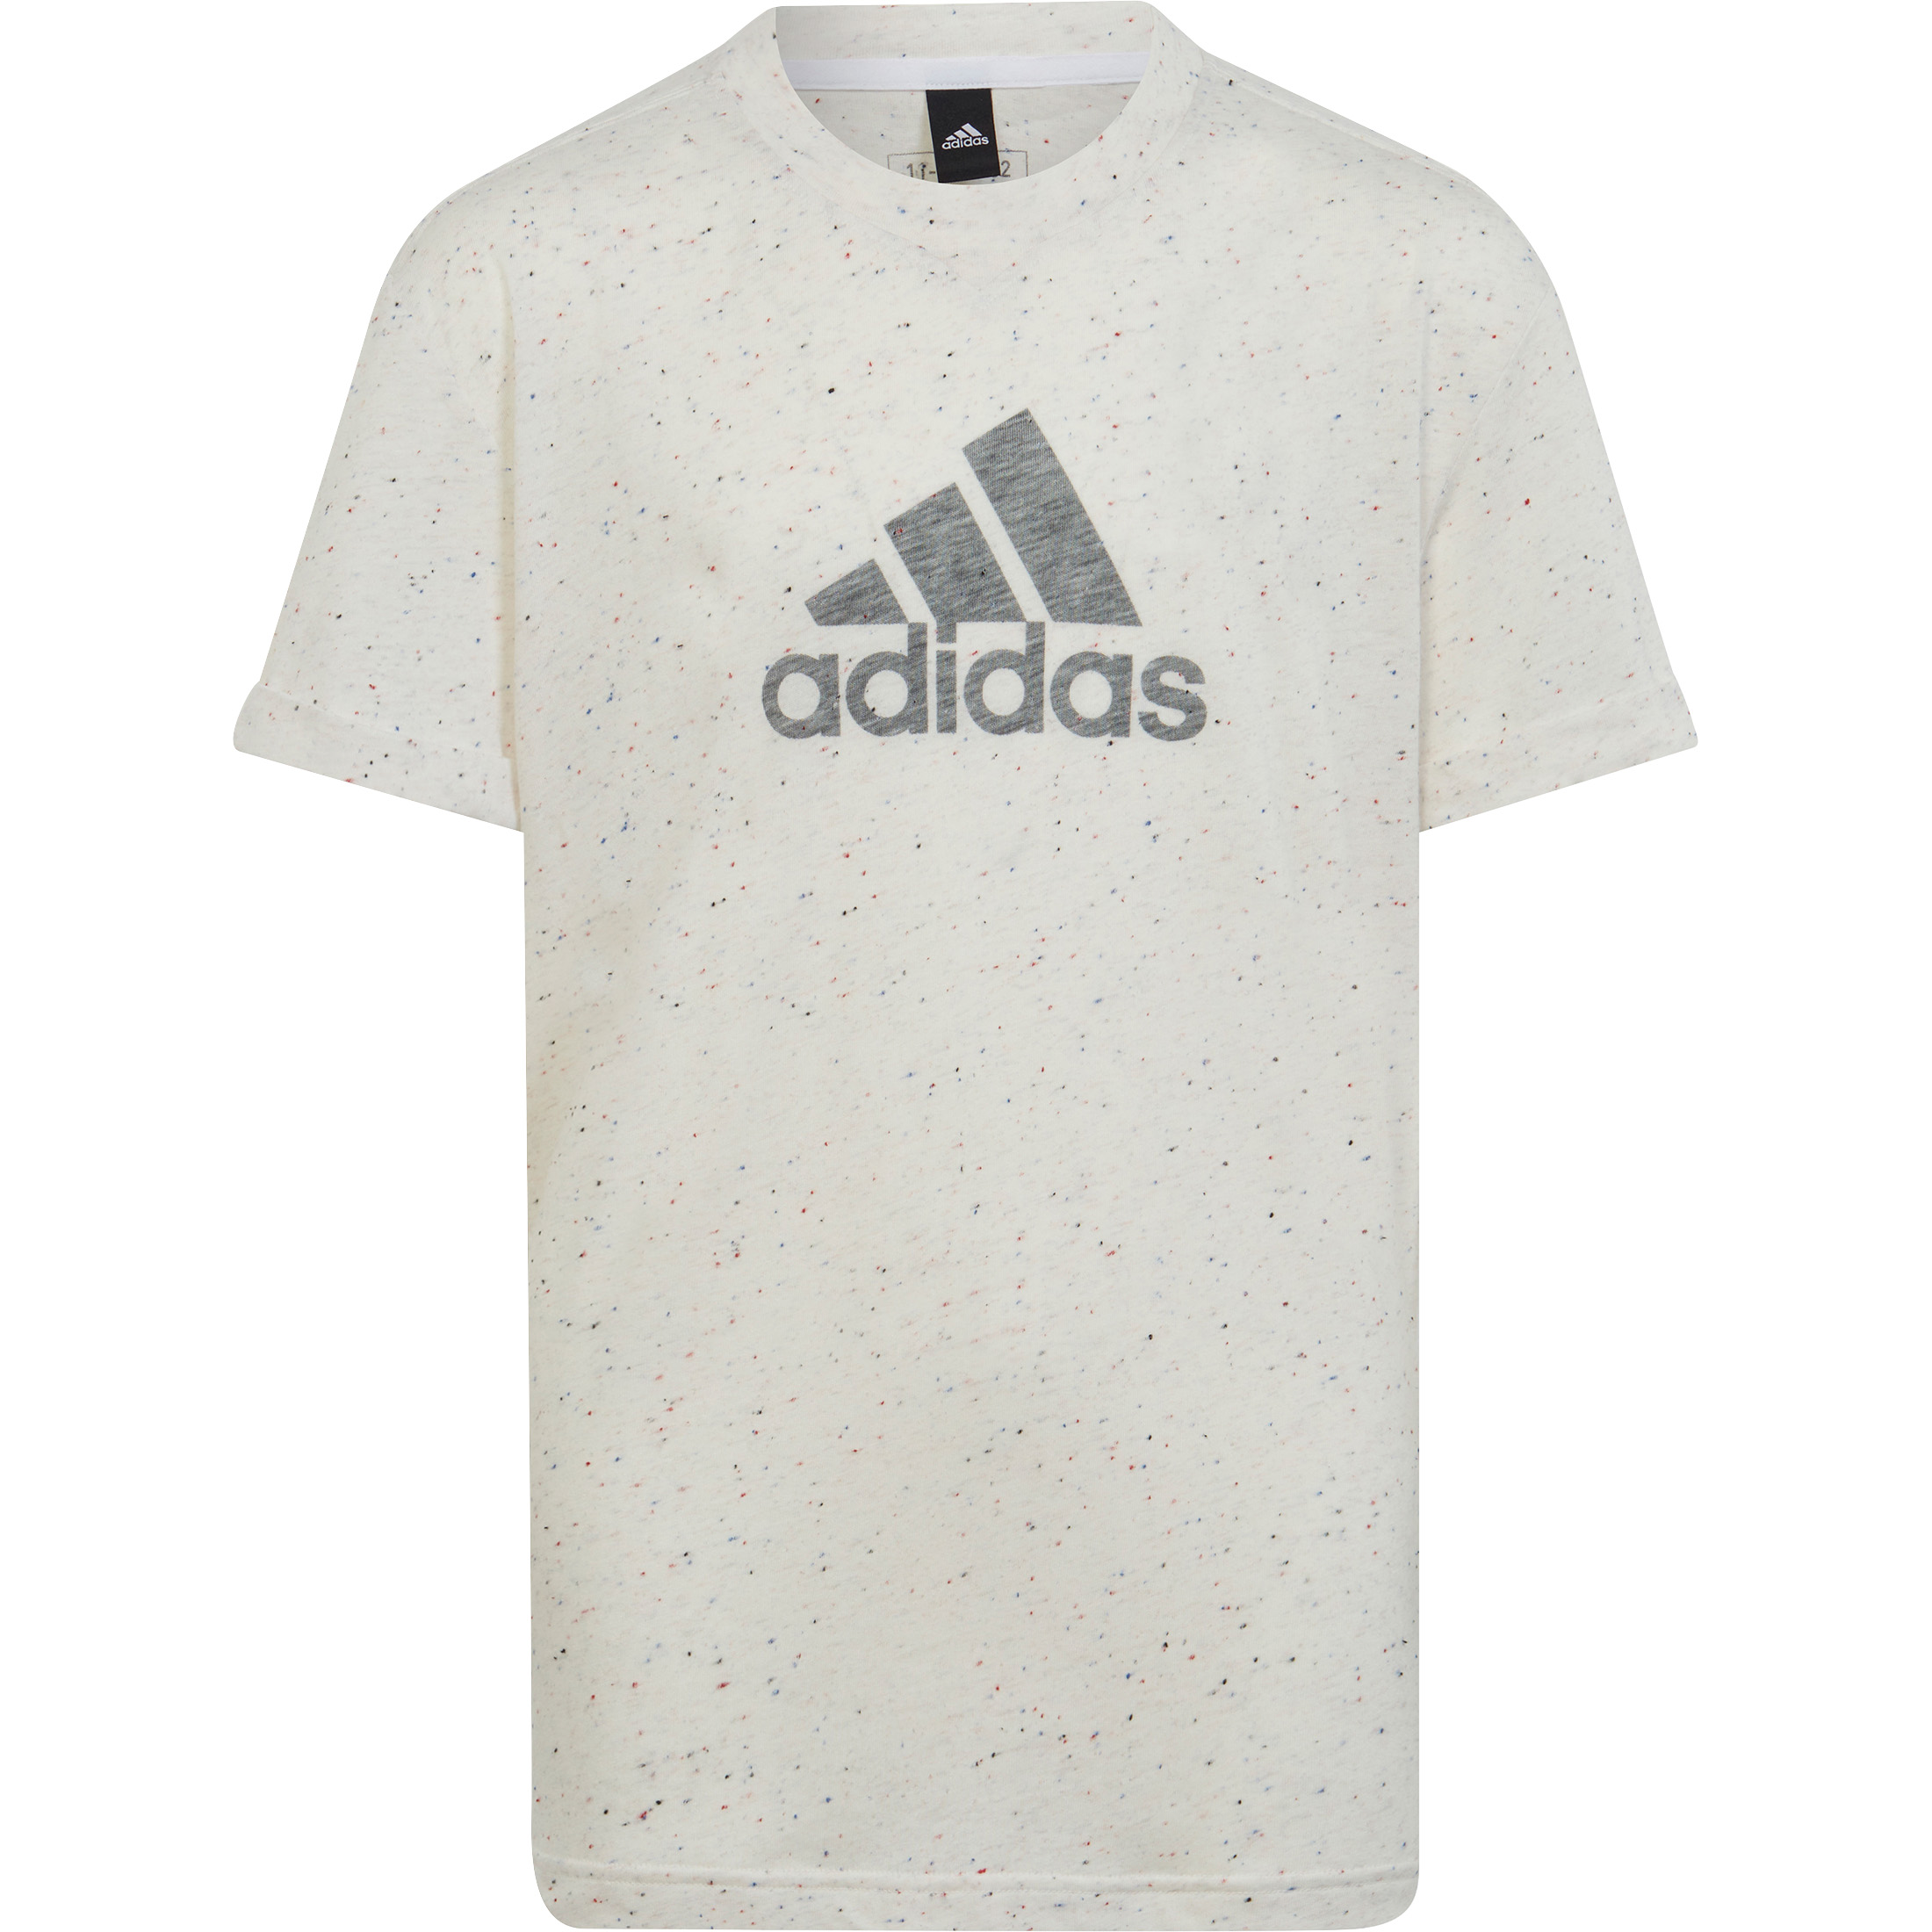 Adidas Future Icons Winners shirt grey junior melange white four